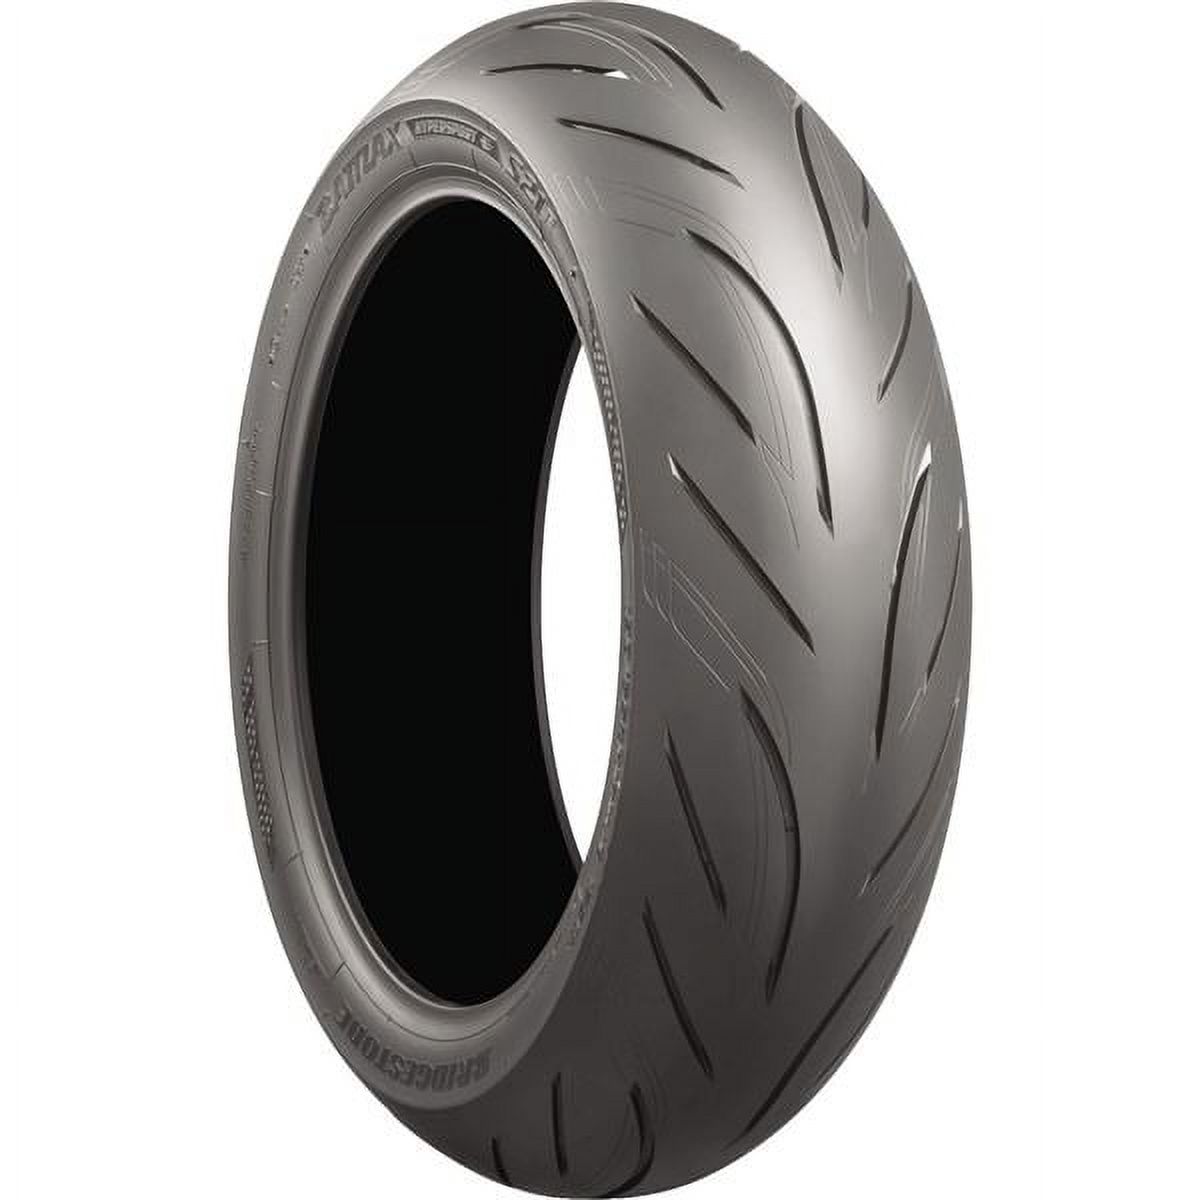 Bridgestone Battlax Hypersport S21 Motorcycle Rear Tire 190/50ZR17 005486 - image 2 of 2